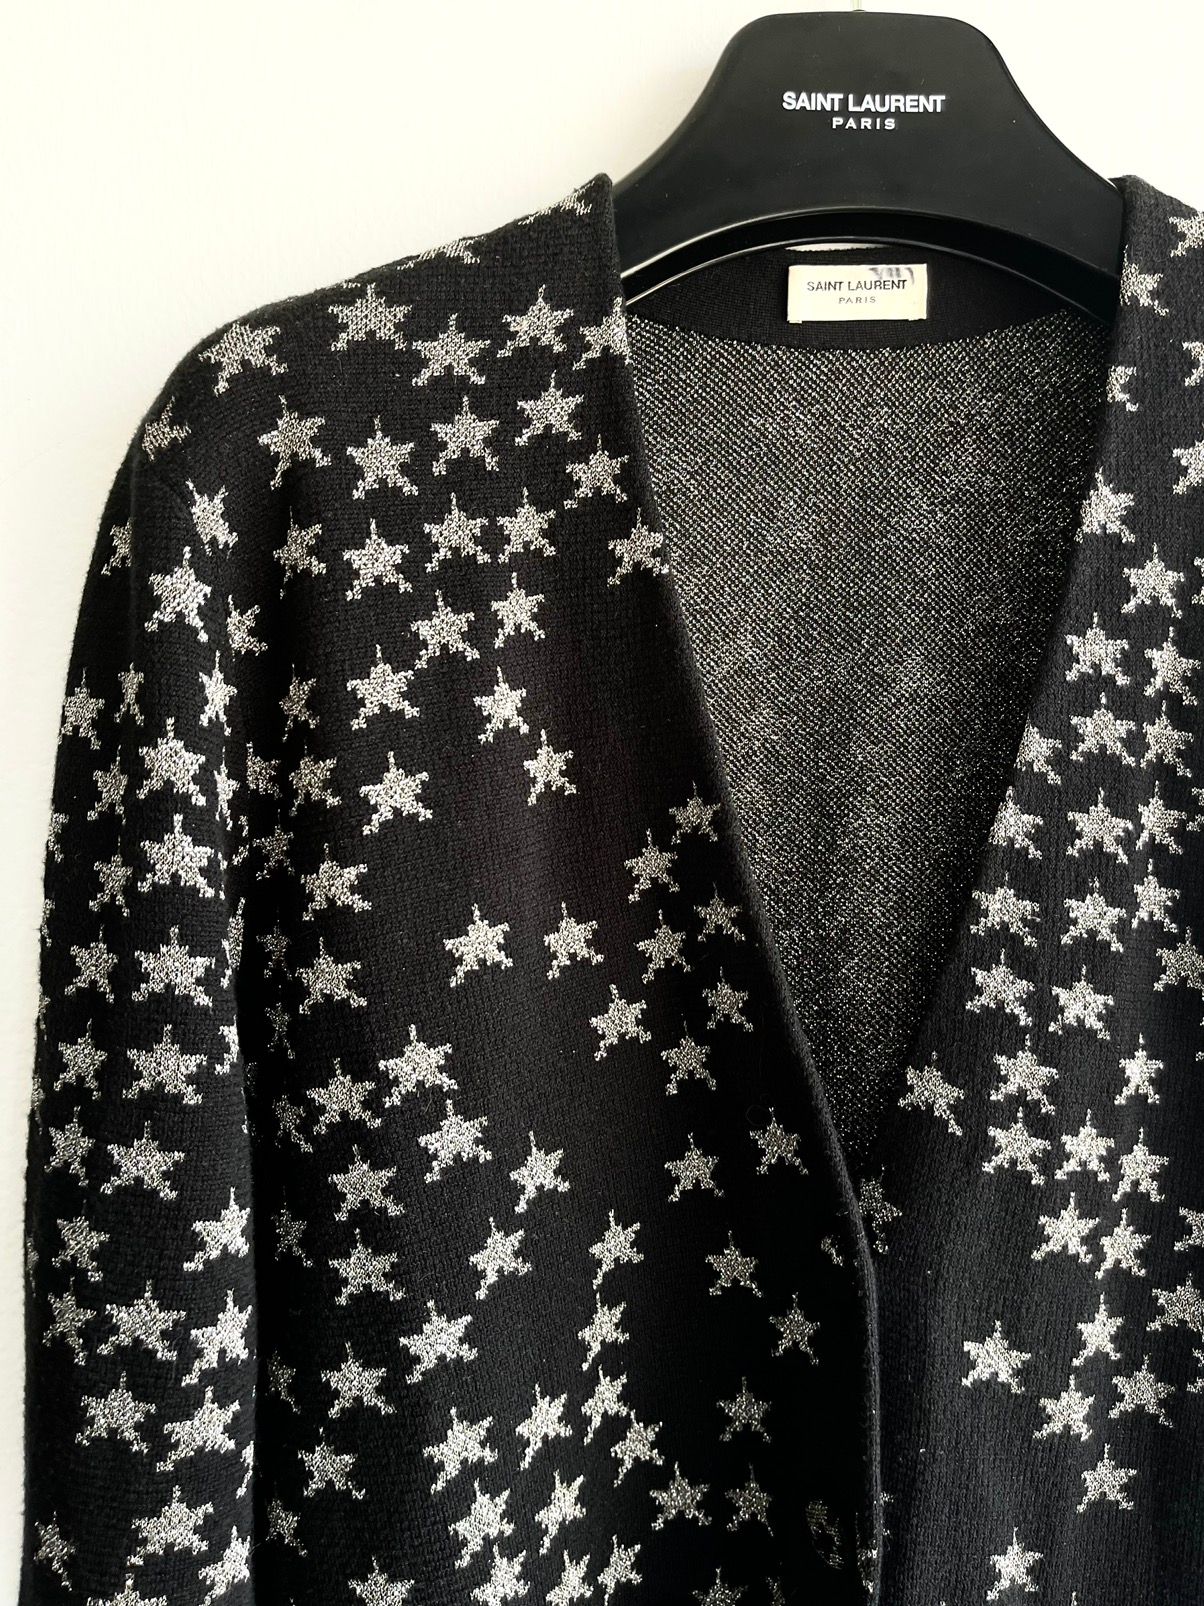 FW15 Star Sweater Cardigan Grunge Hedi Slimane